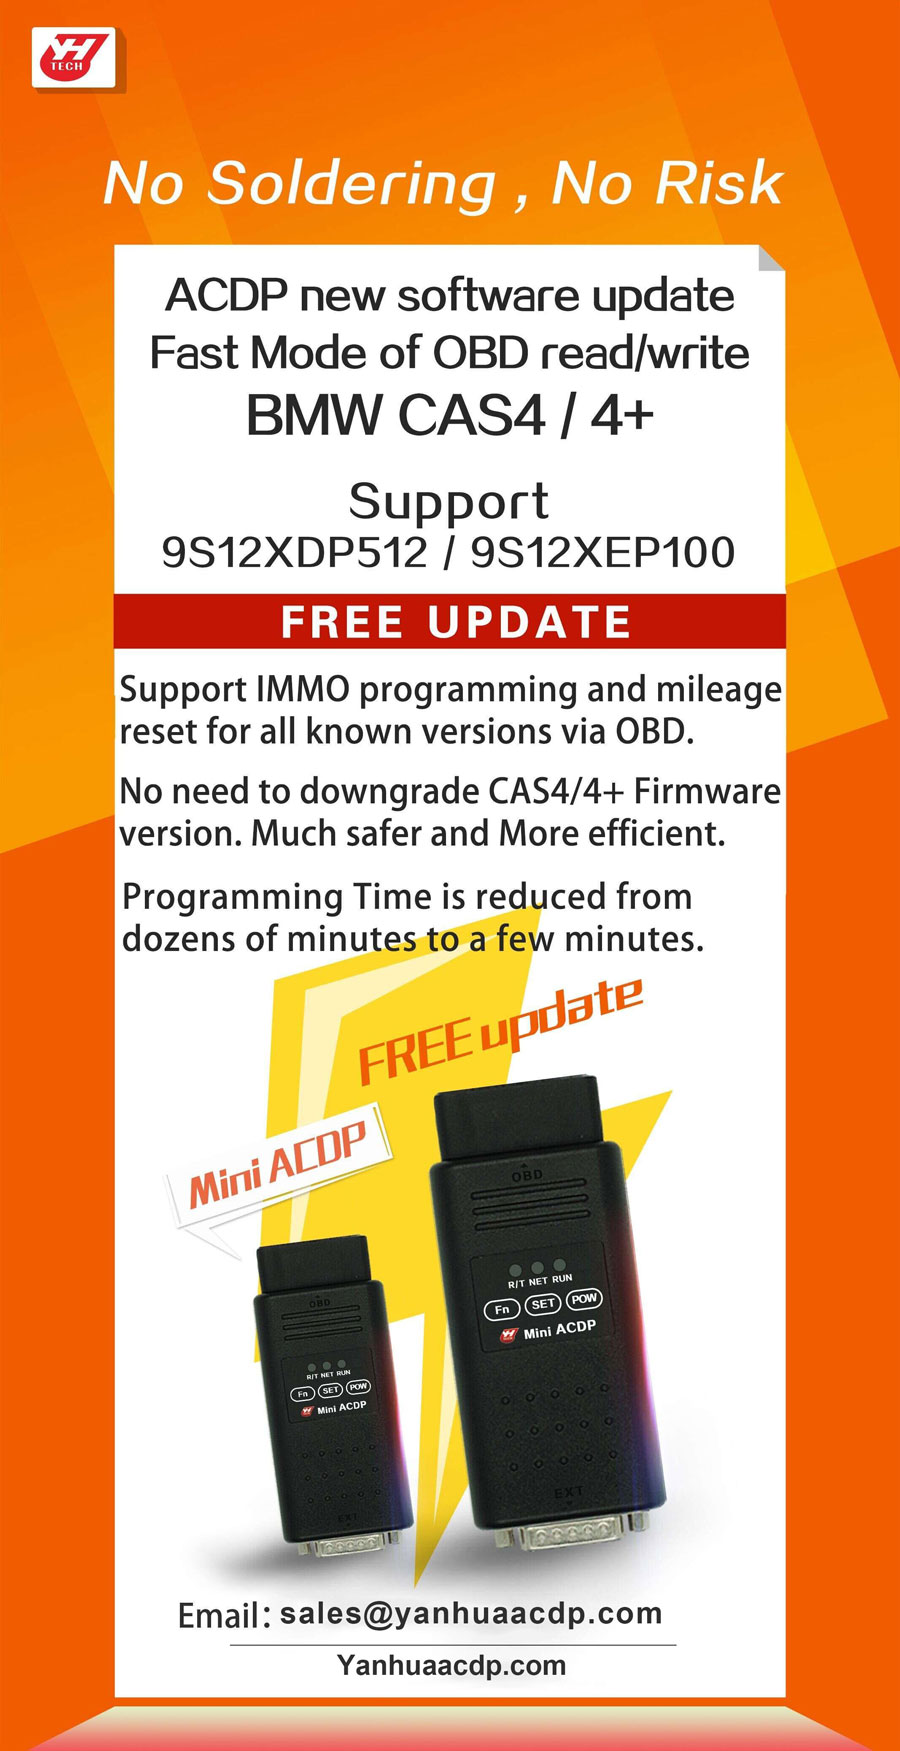 acdp cas4 free update